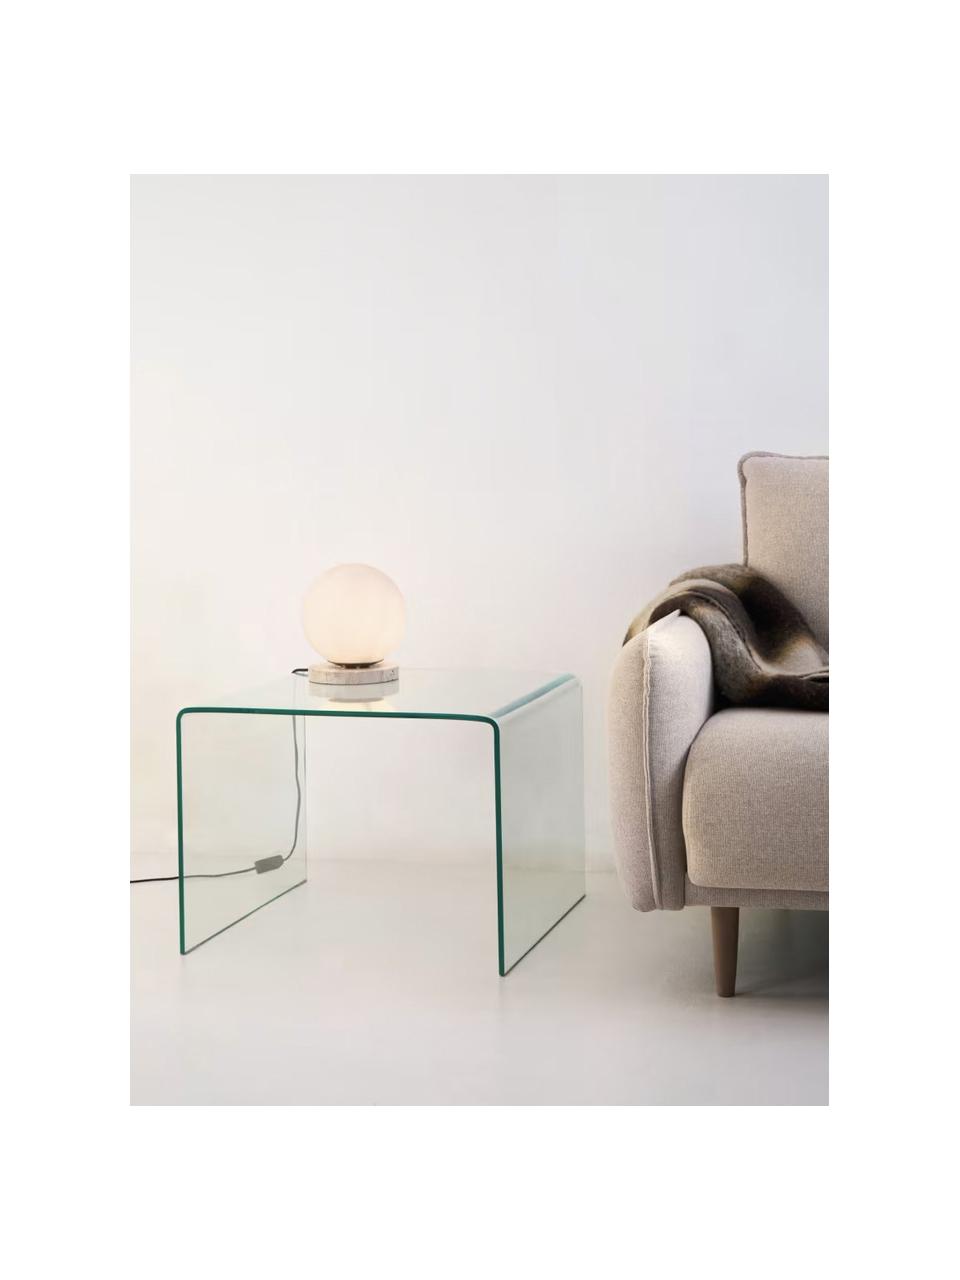 Tavolino in vetro Burano, Vetro, temperato, Trasparente, Larg. 60 x Alt. 45 cm